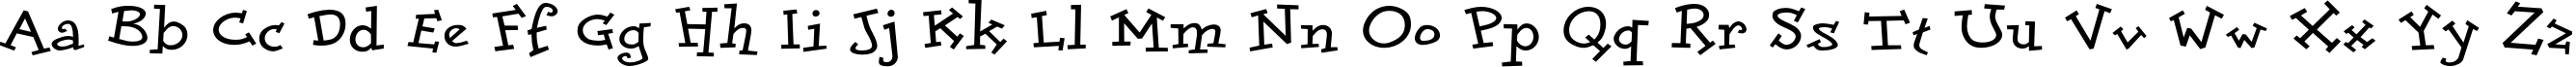 Пример написания английского алфавита шрифтом DoloresCyr Light Bold